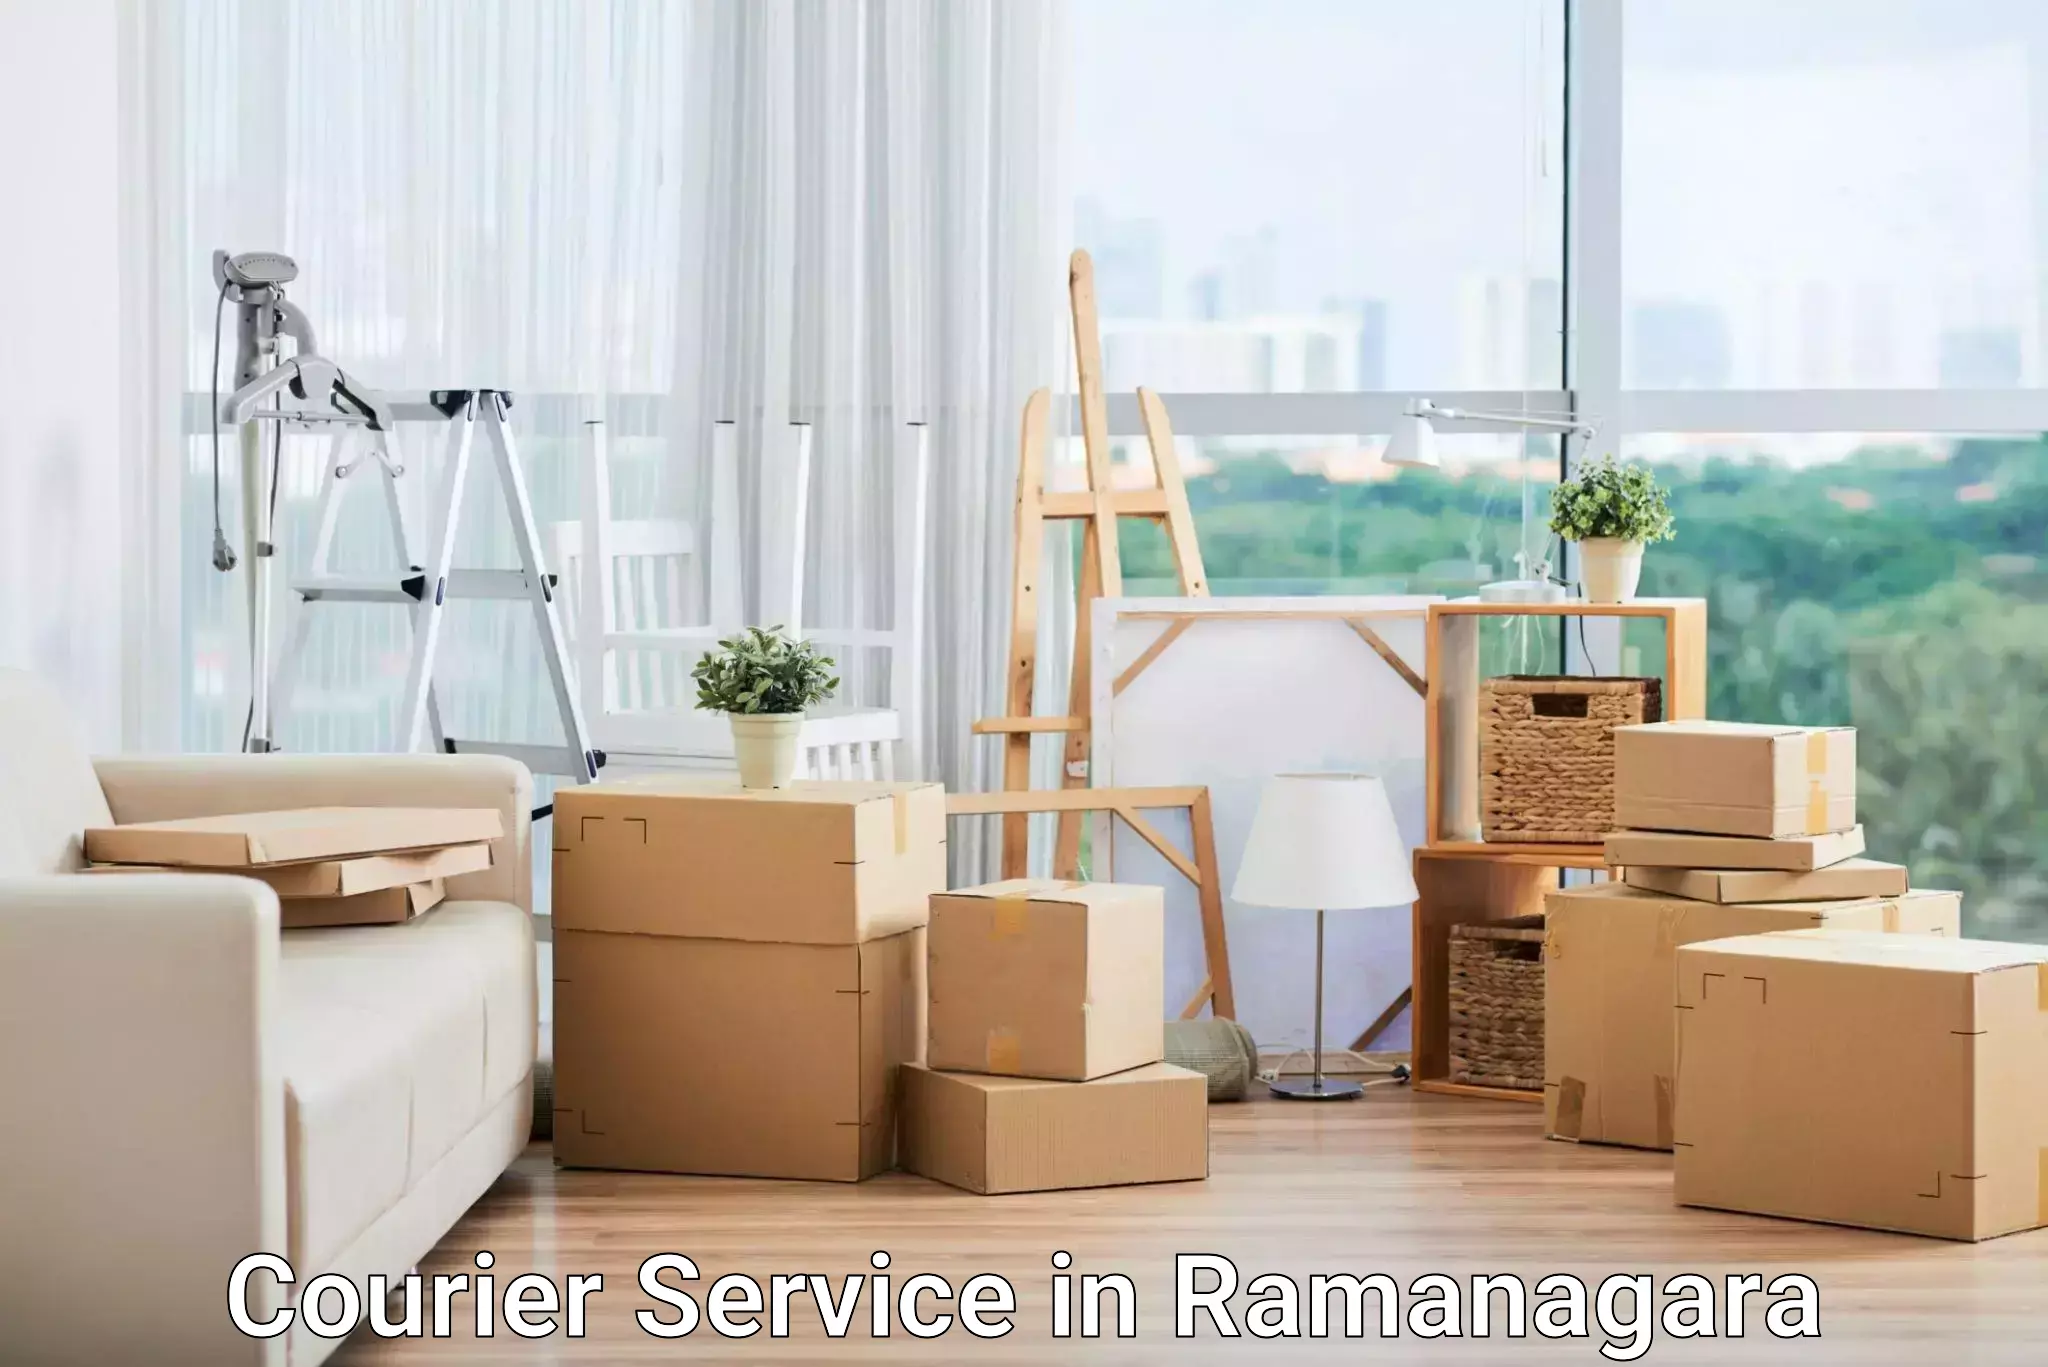 Online package tracking in Ramanagara